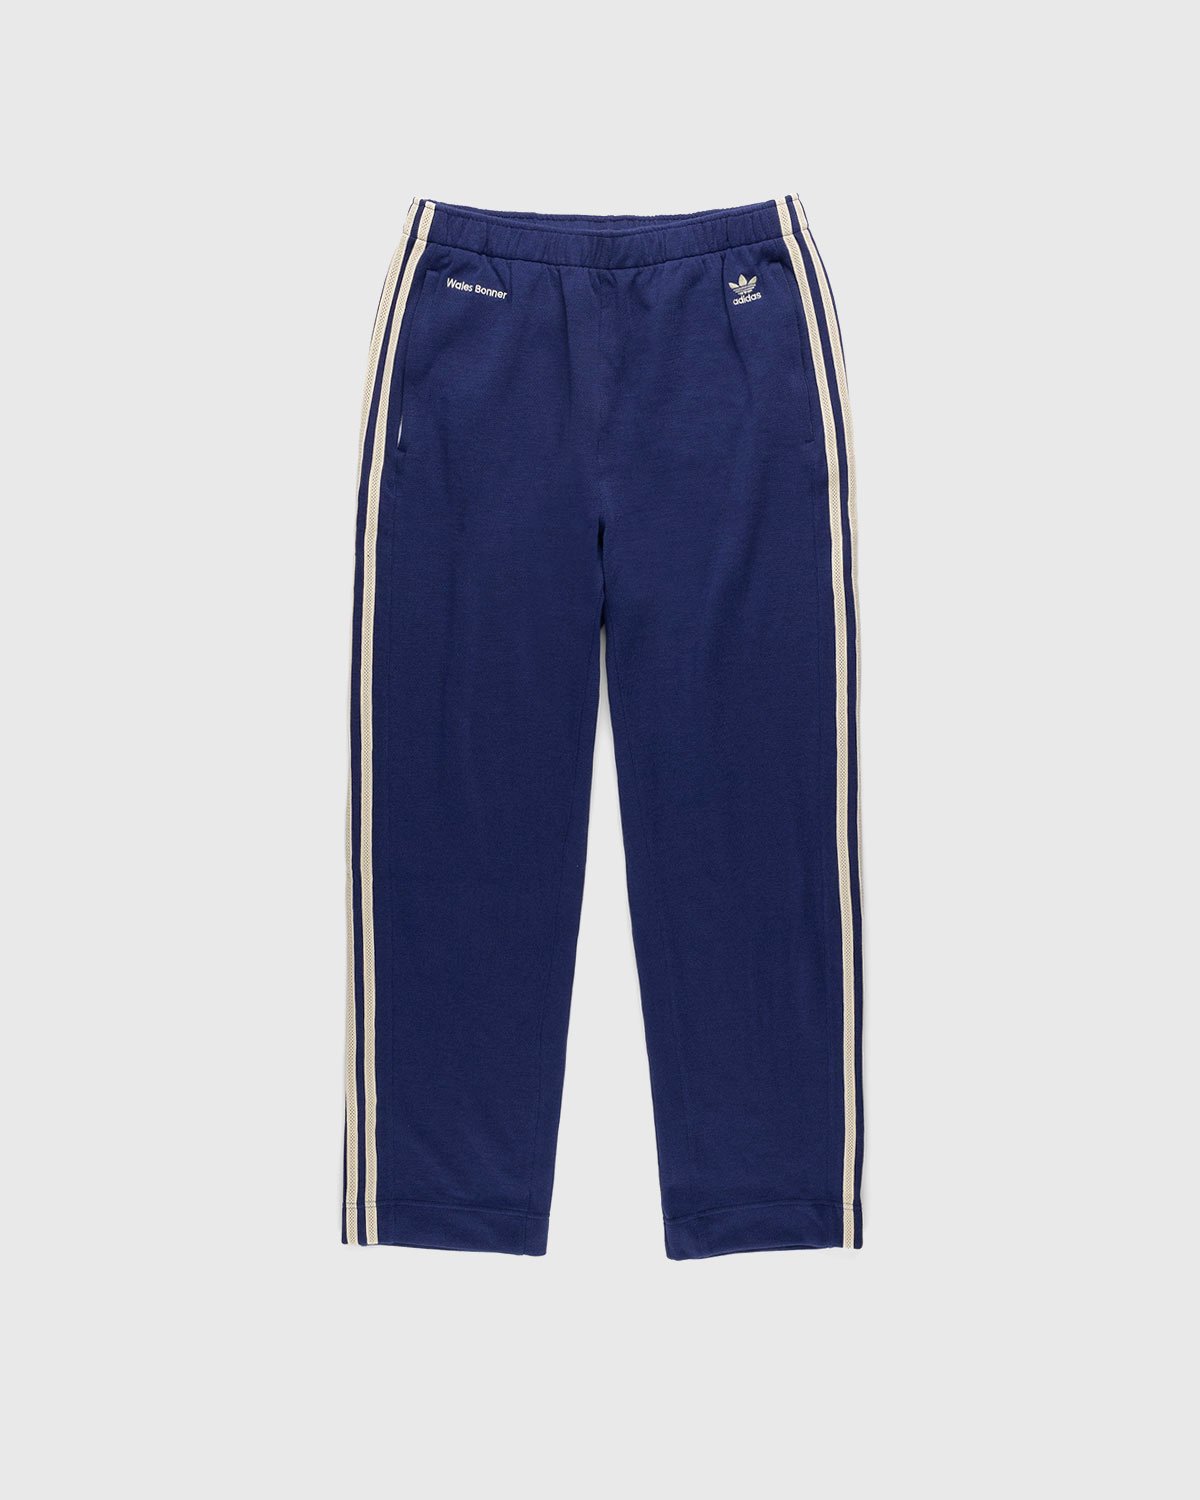 Adidas x Wales Bonner - 80s Track Pants Night Sky - Clothing - Blue - Image 1